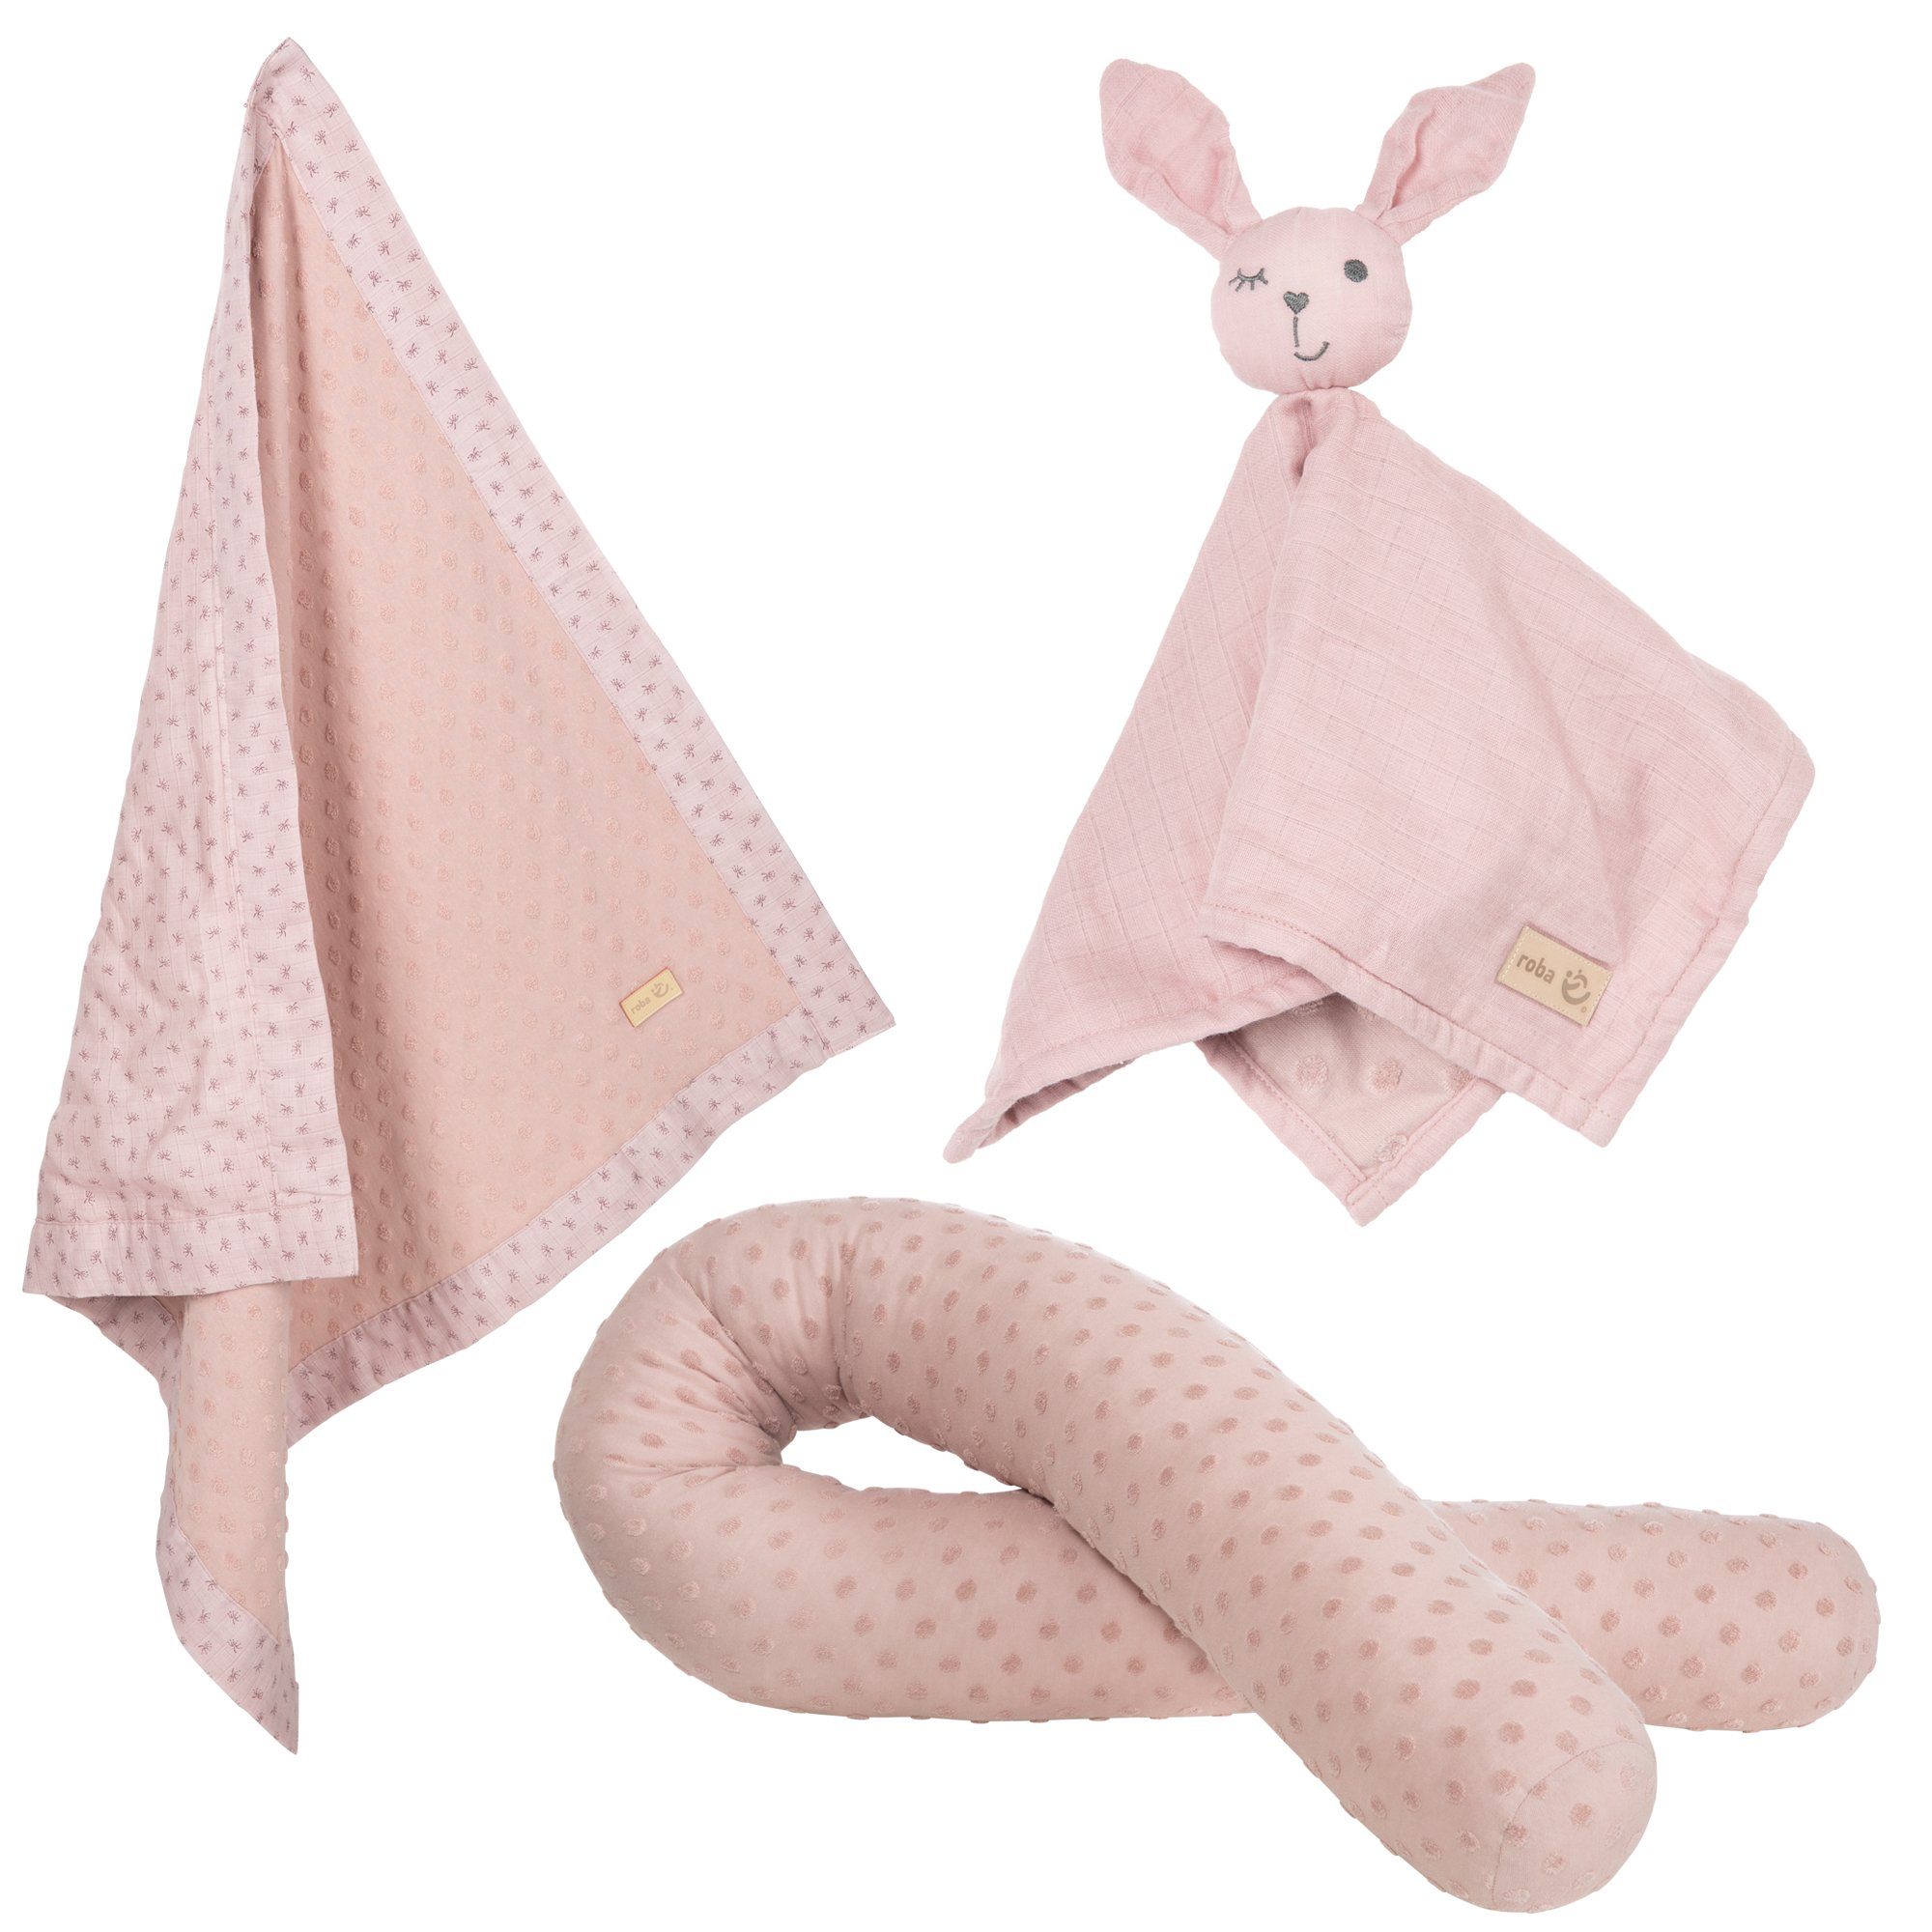 roba® Neugeborenen-Geschenkset Lil Planet Bettschlange, Babydecke & Schmusetuch rosa/mauve